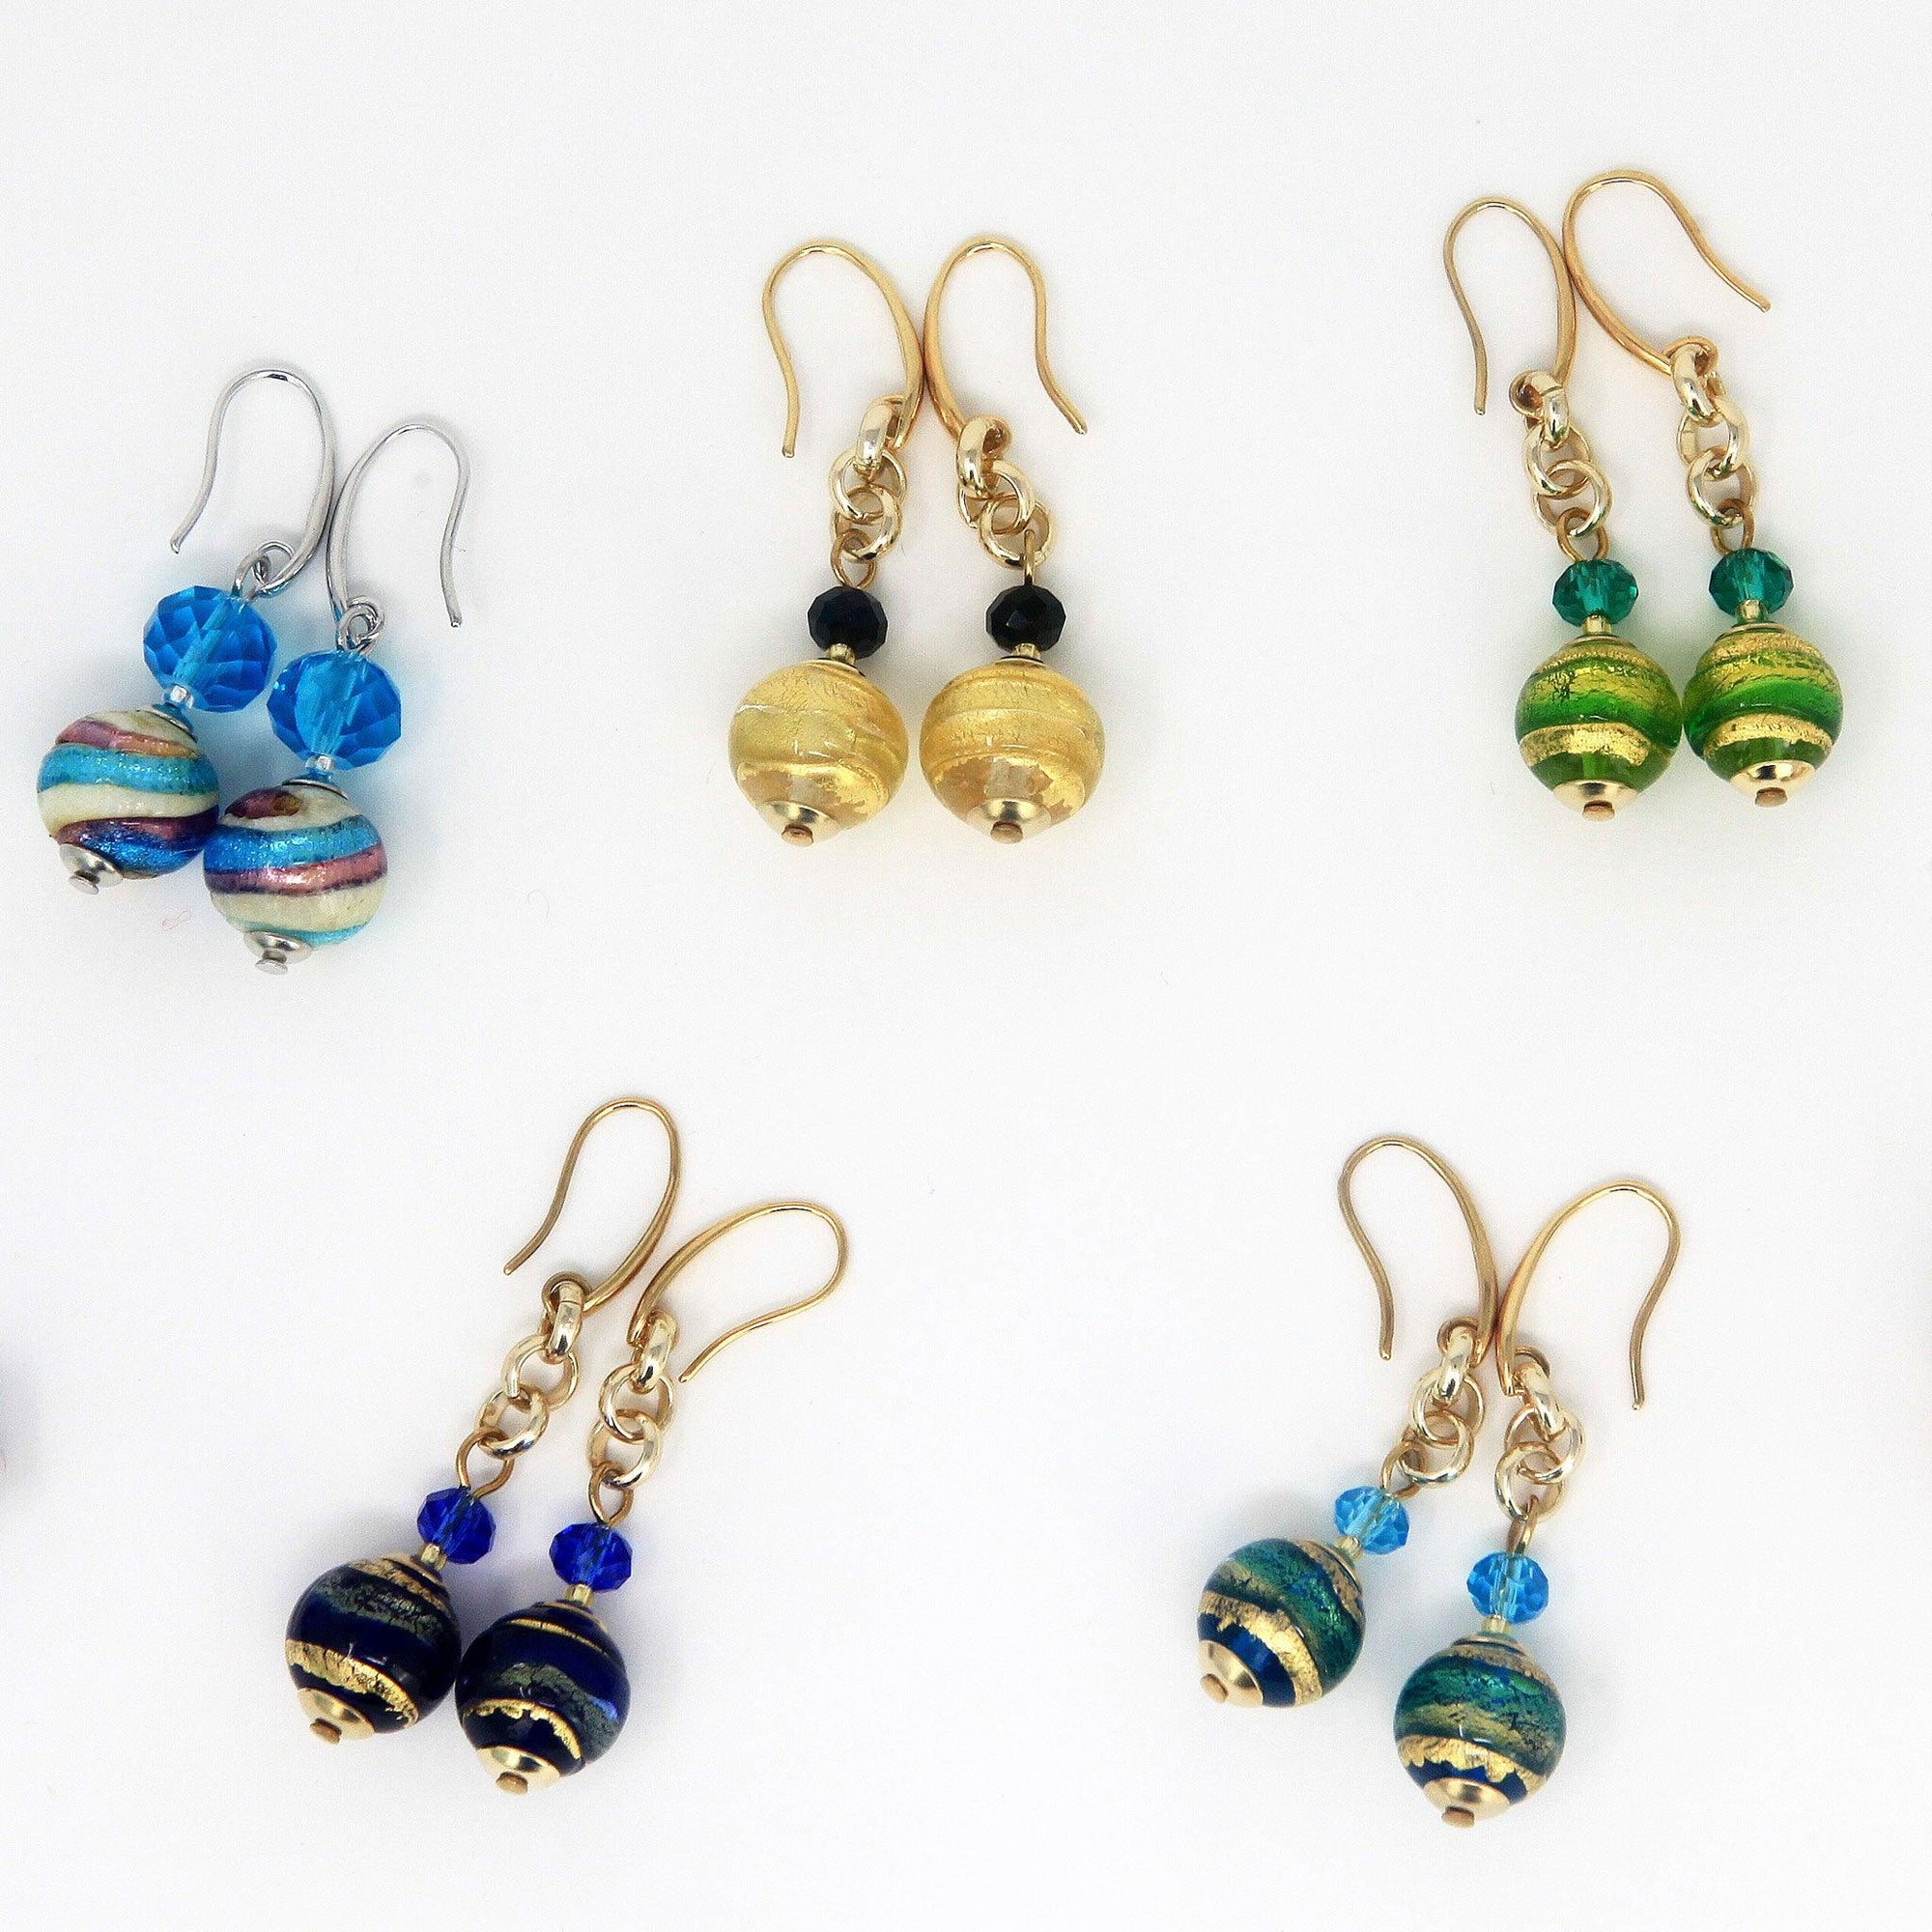 Rialto Murano Glass Bead Earrings, Made in Italy, Choice of Color - MyItalianDecor